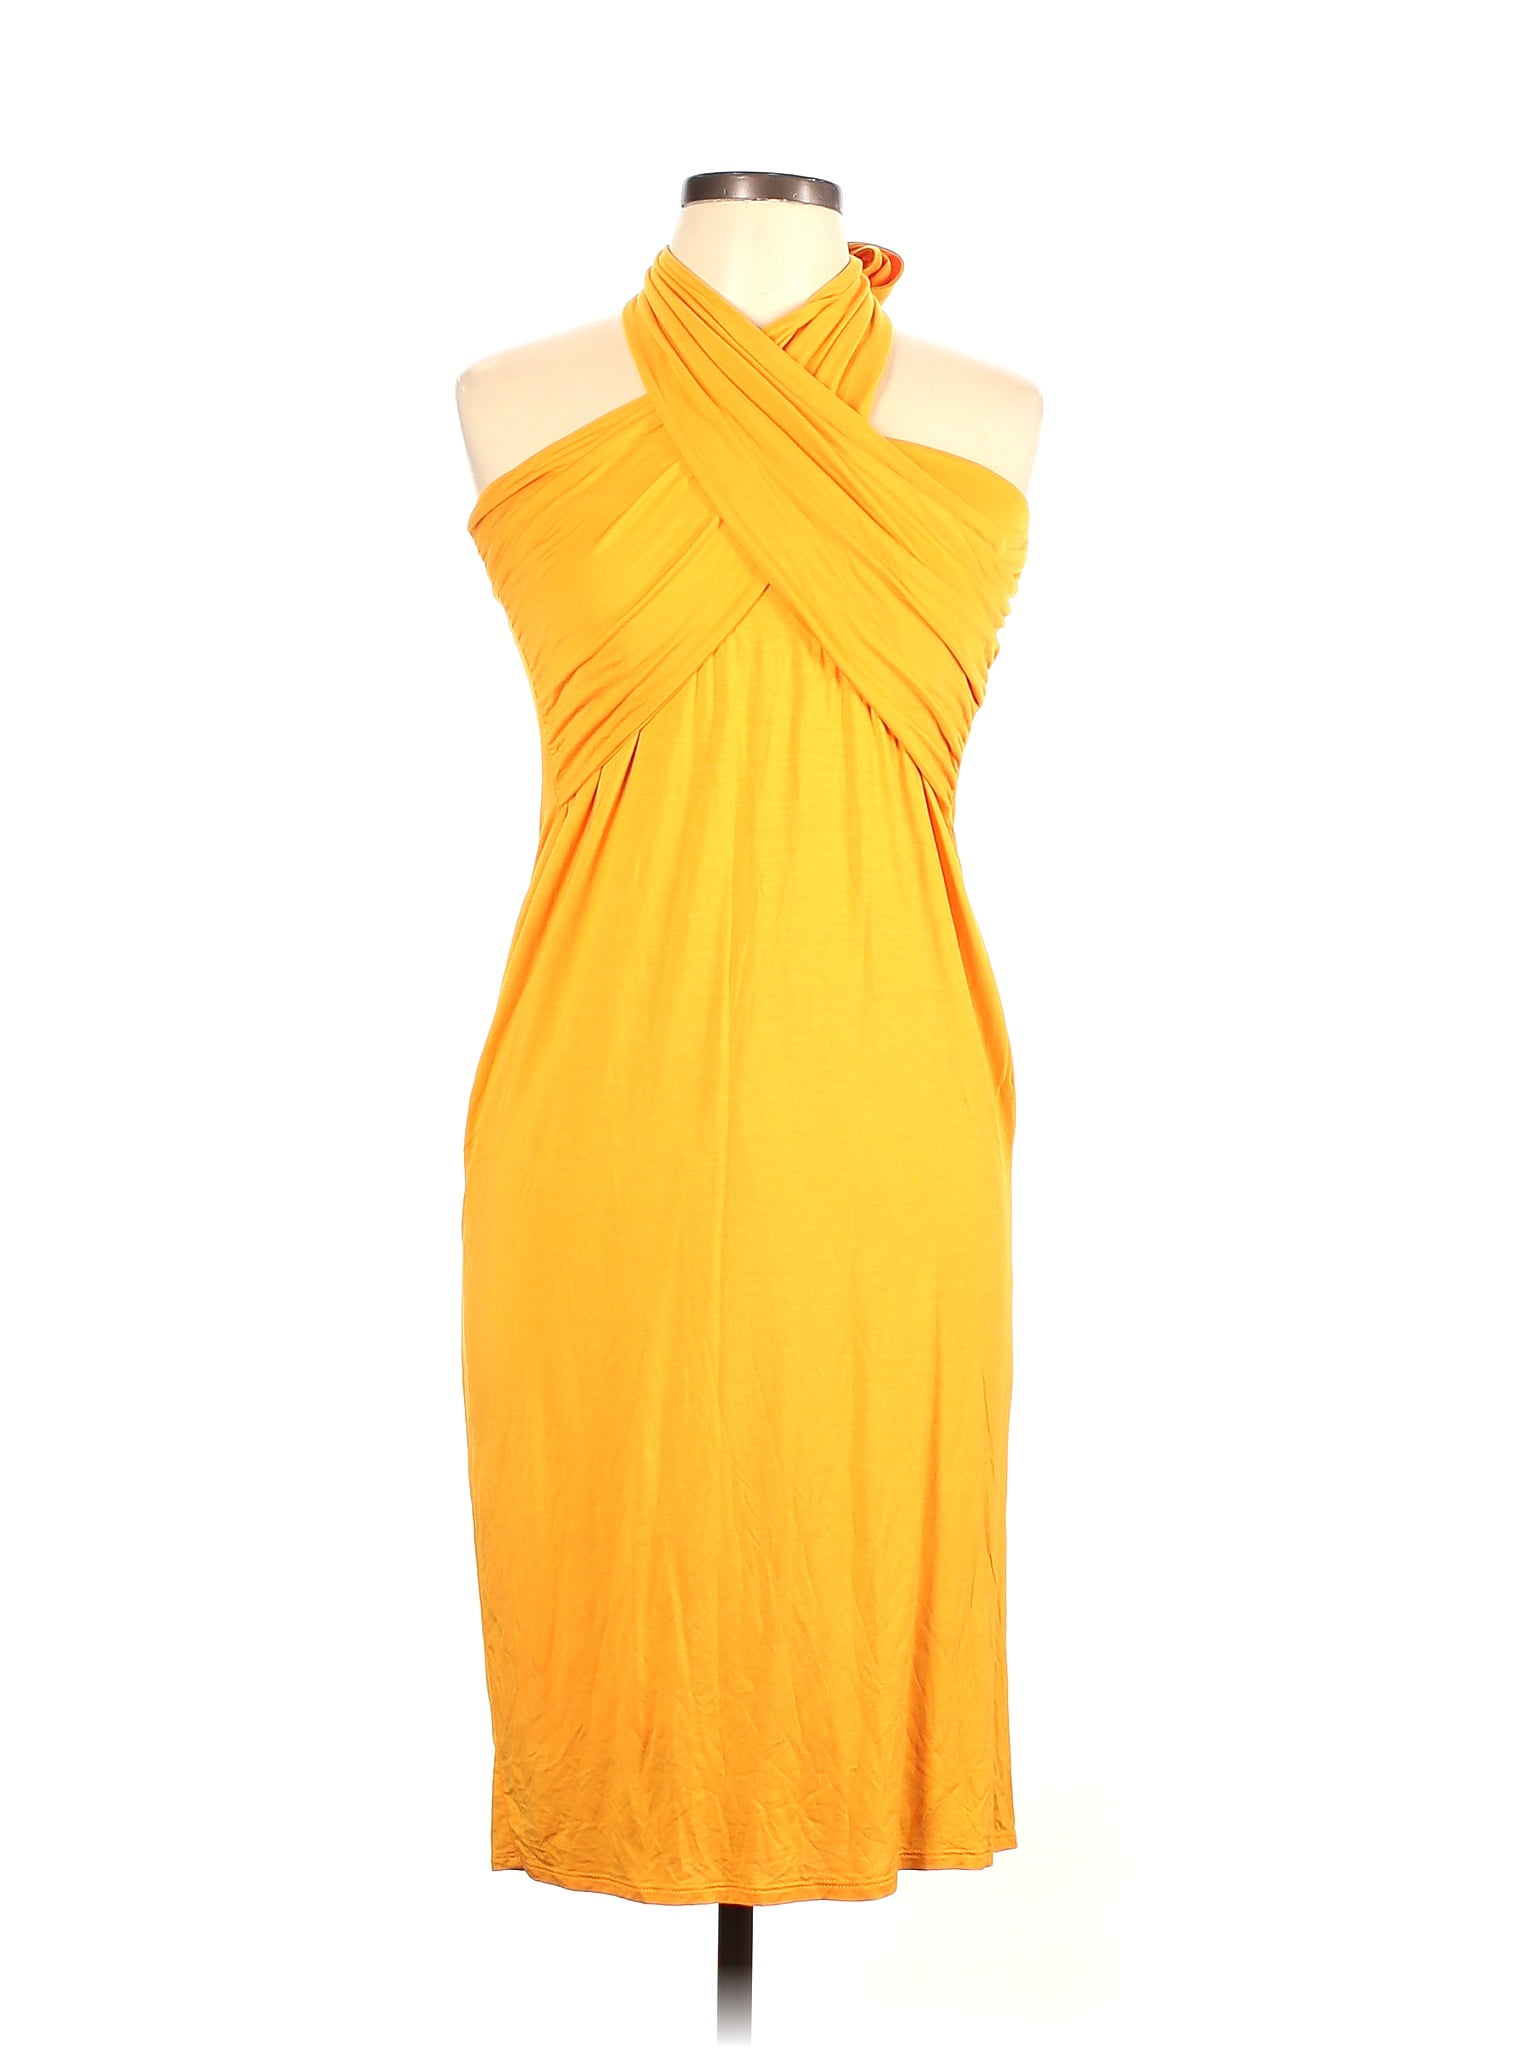 Camila Coelho Yellow Cocktail Dress Size L - 76% off | thredUP